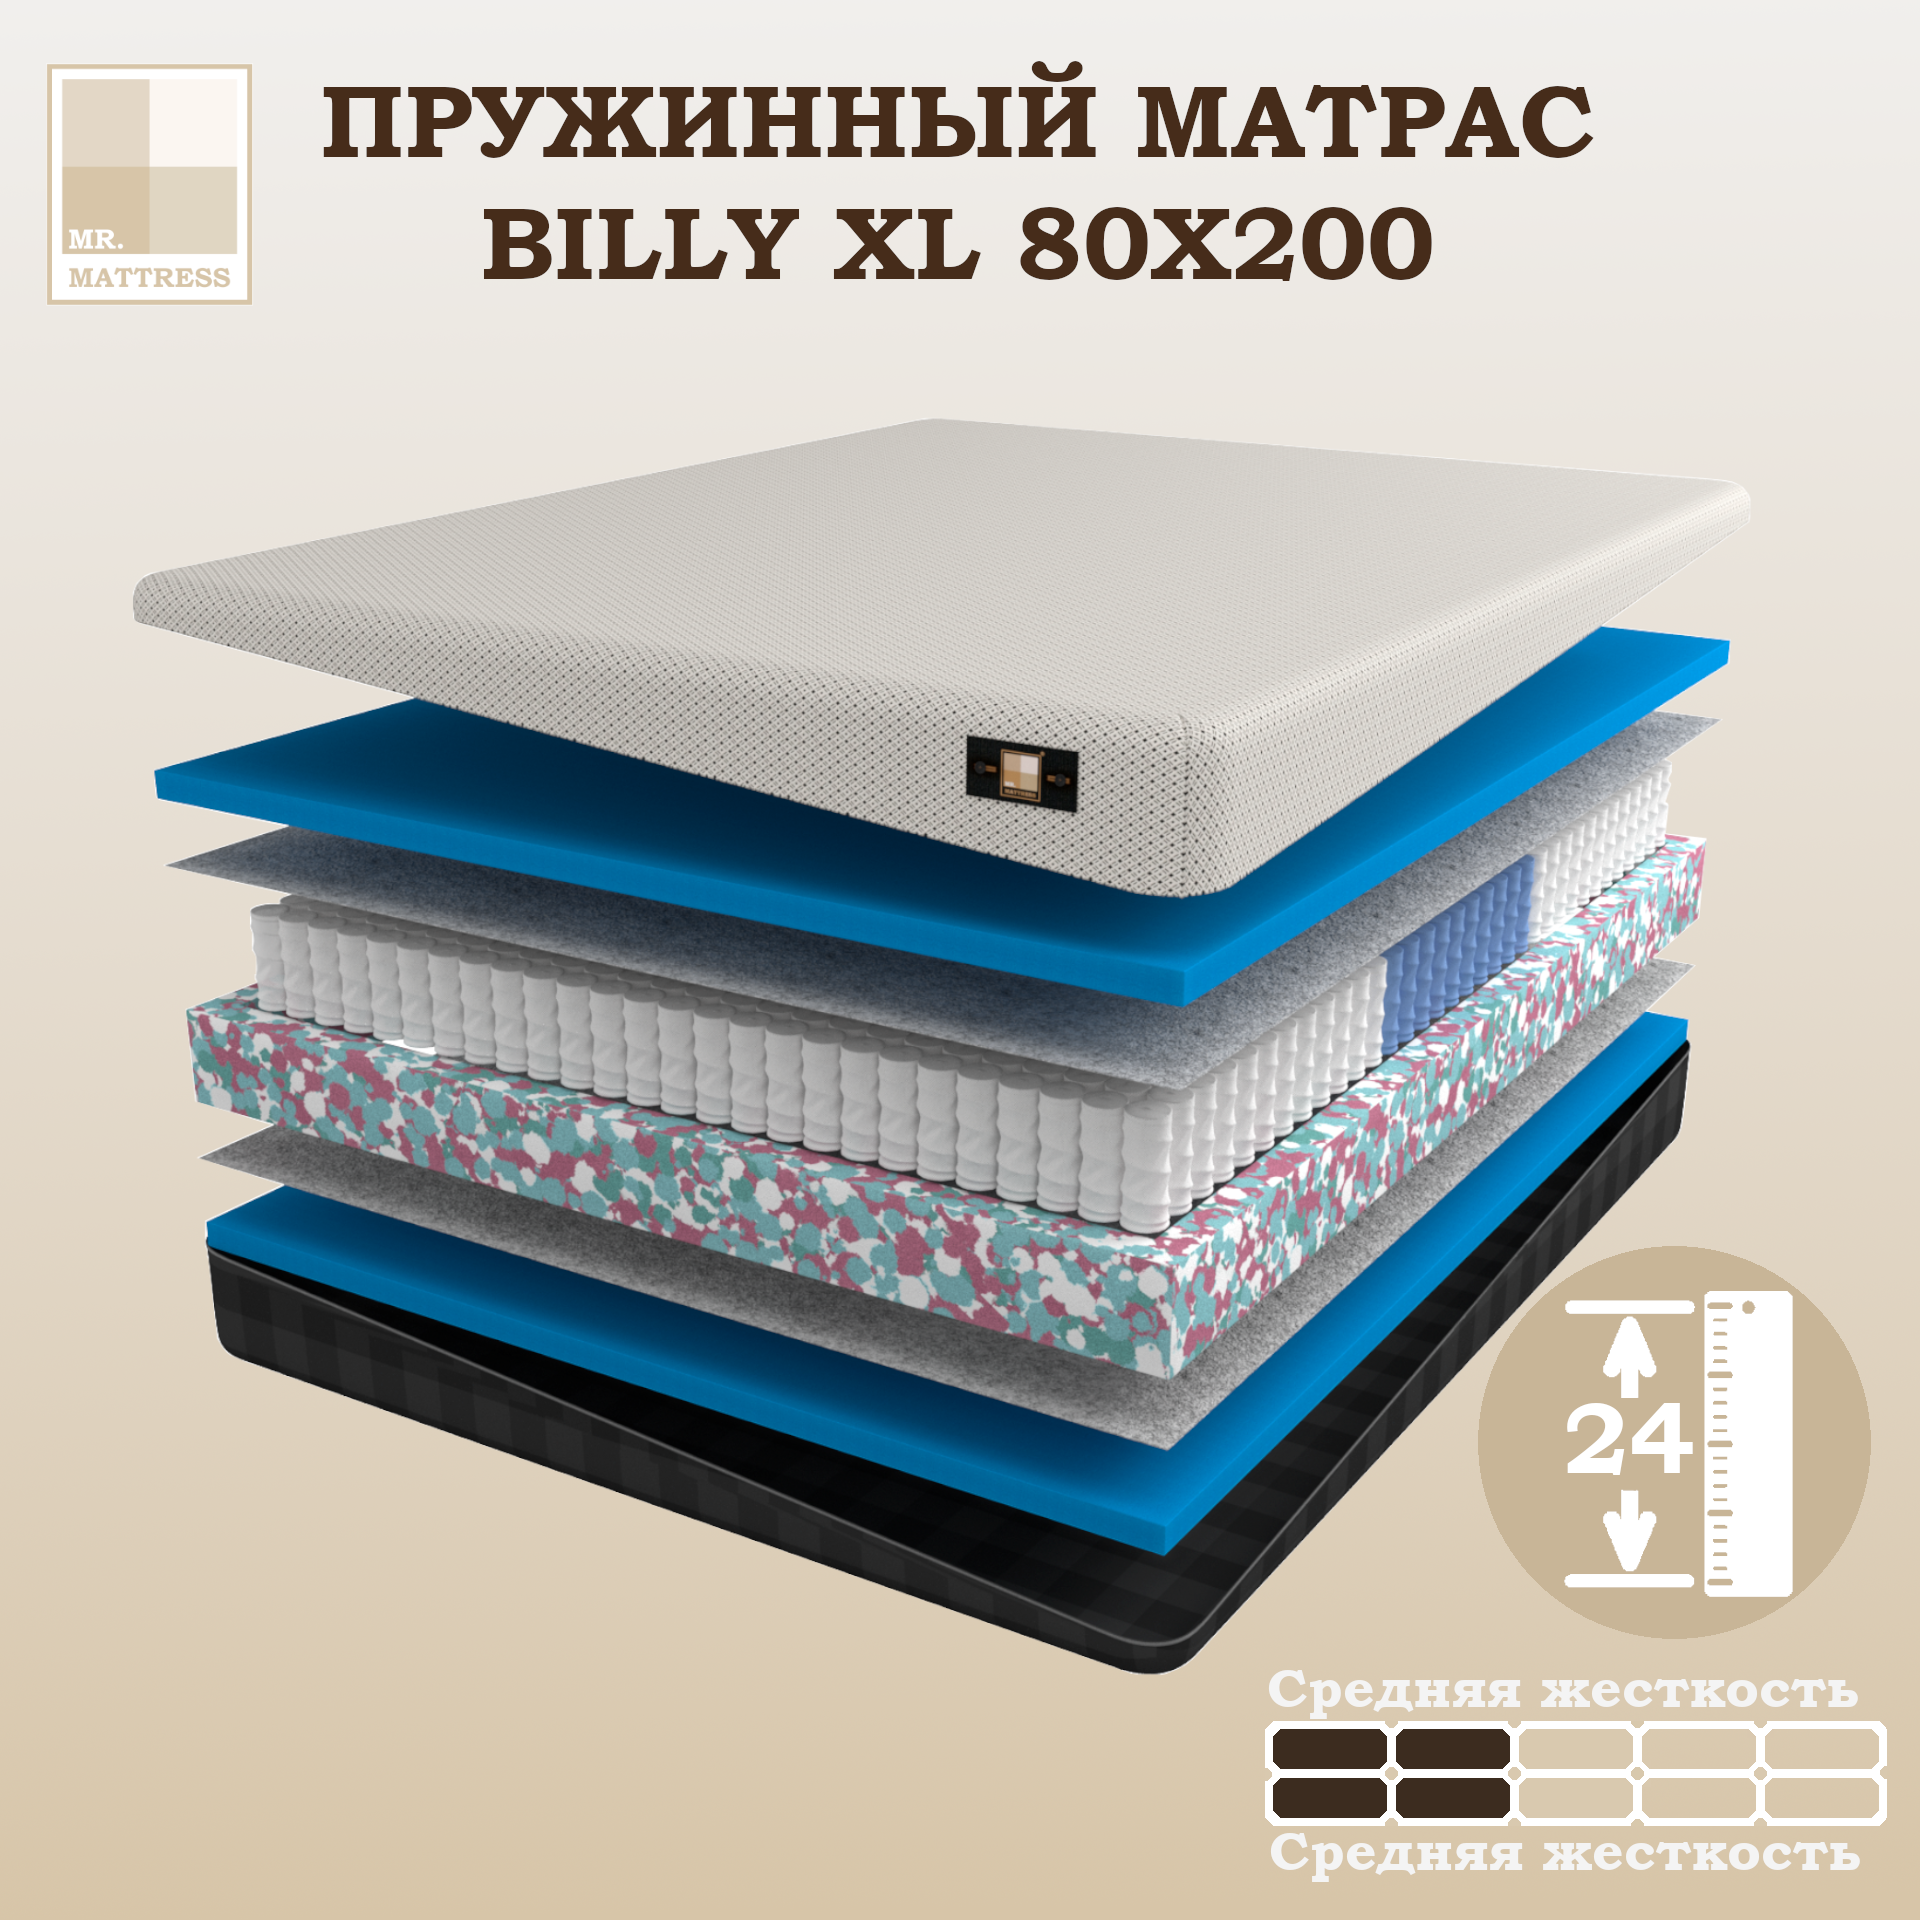 Пружинный матрас Mr.Mattress Billy XL 80x200